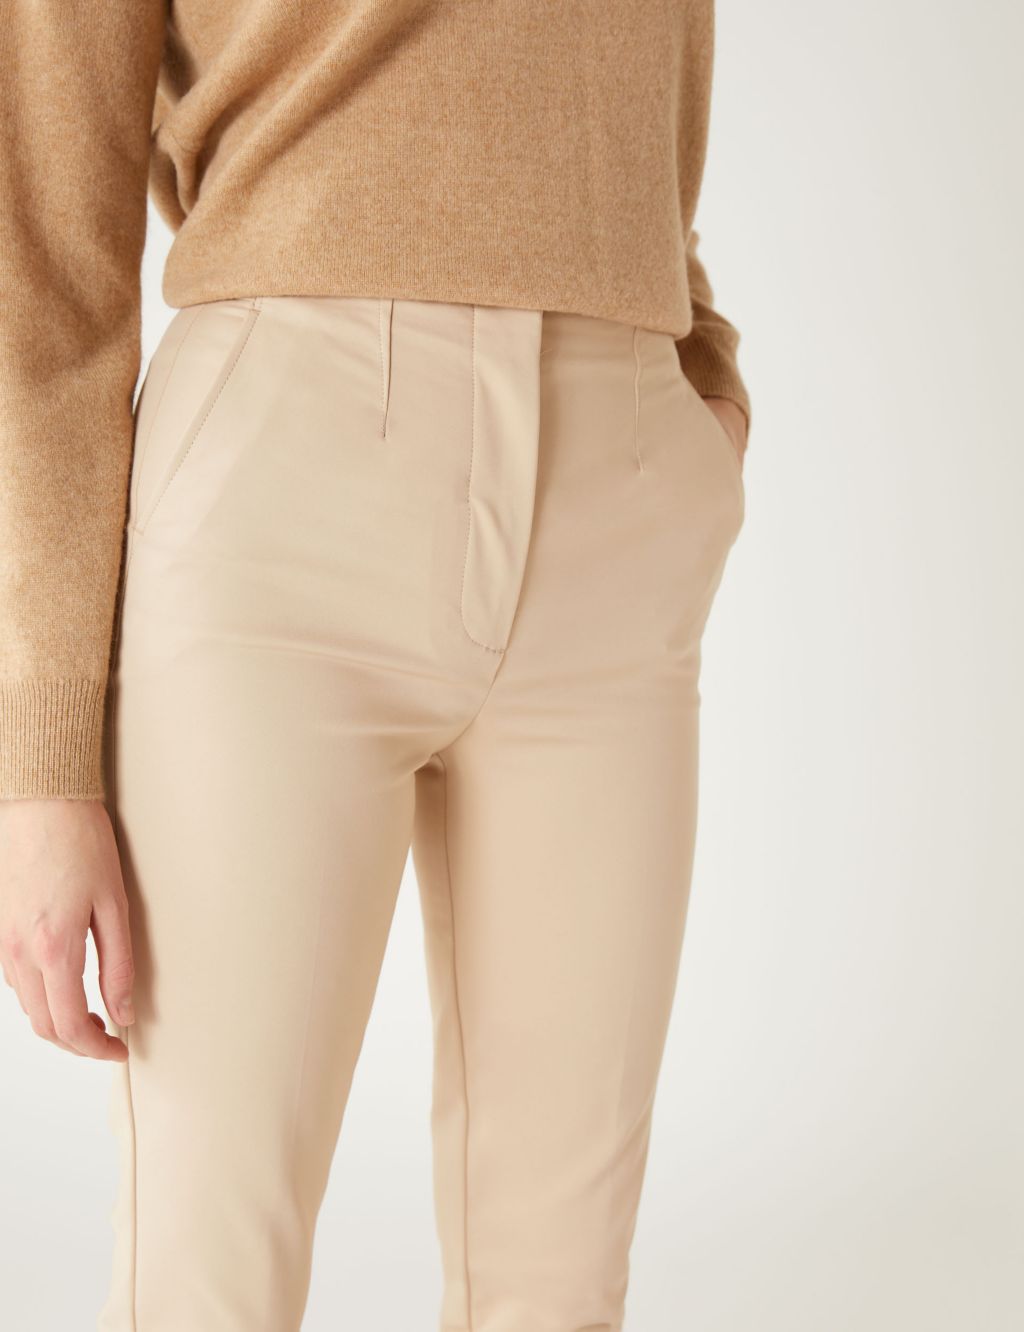 Cotton Blend Slim Fit Ankle Grazer Trousers image 4